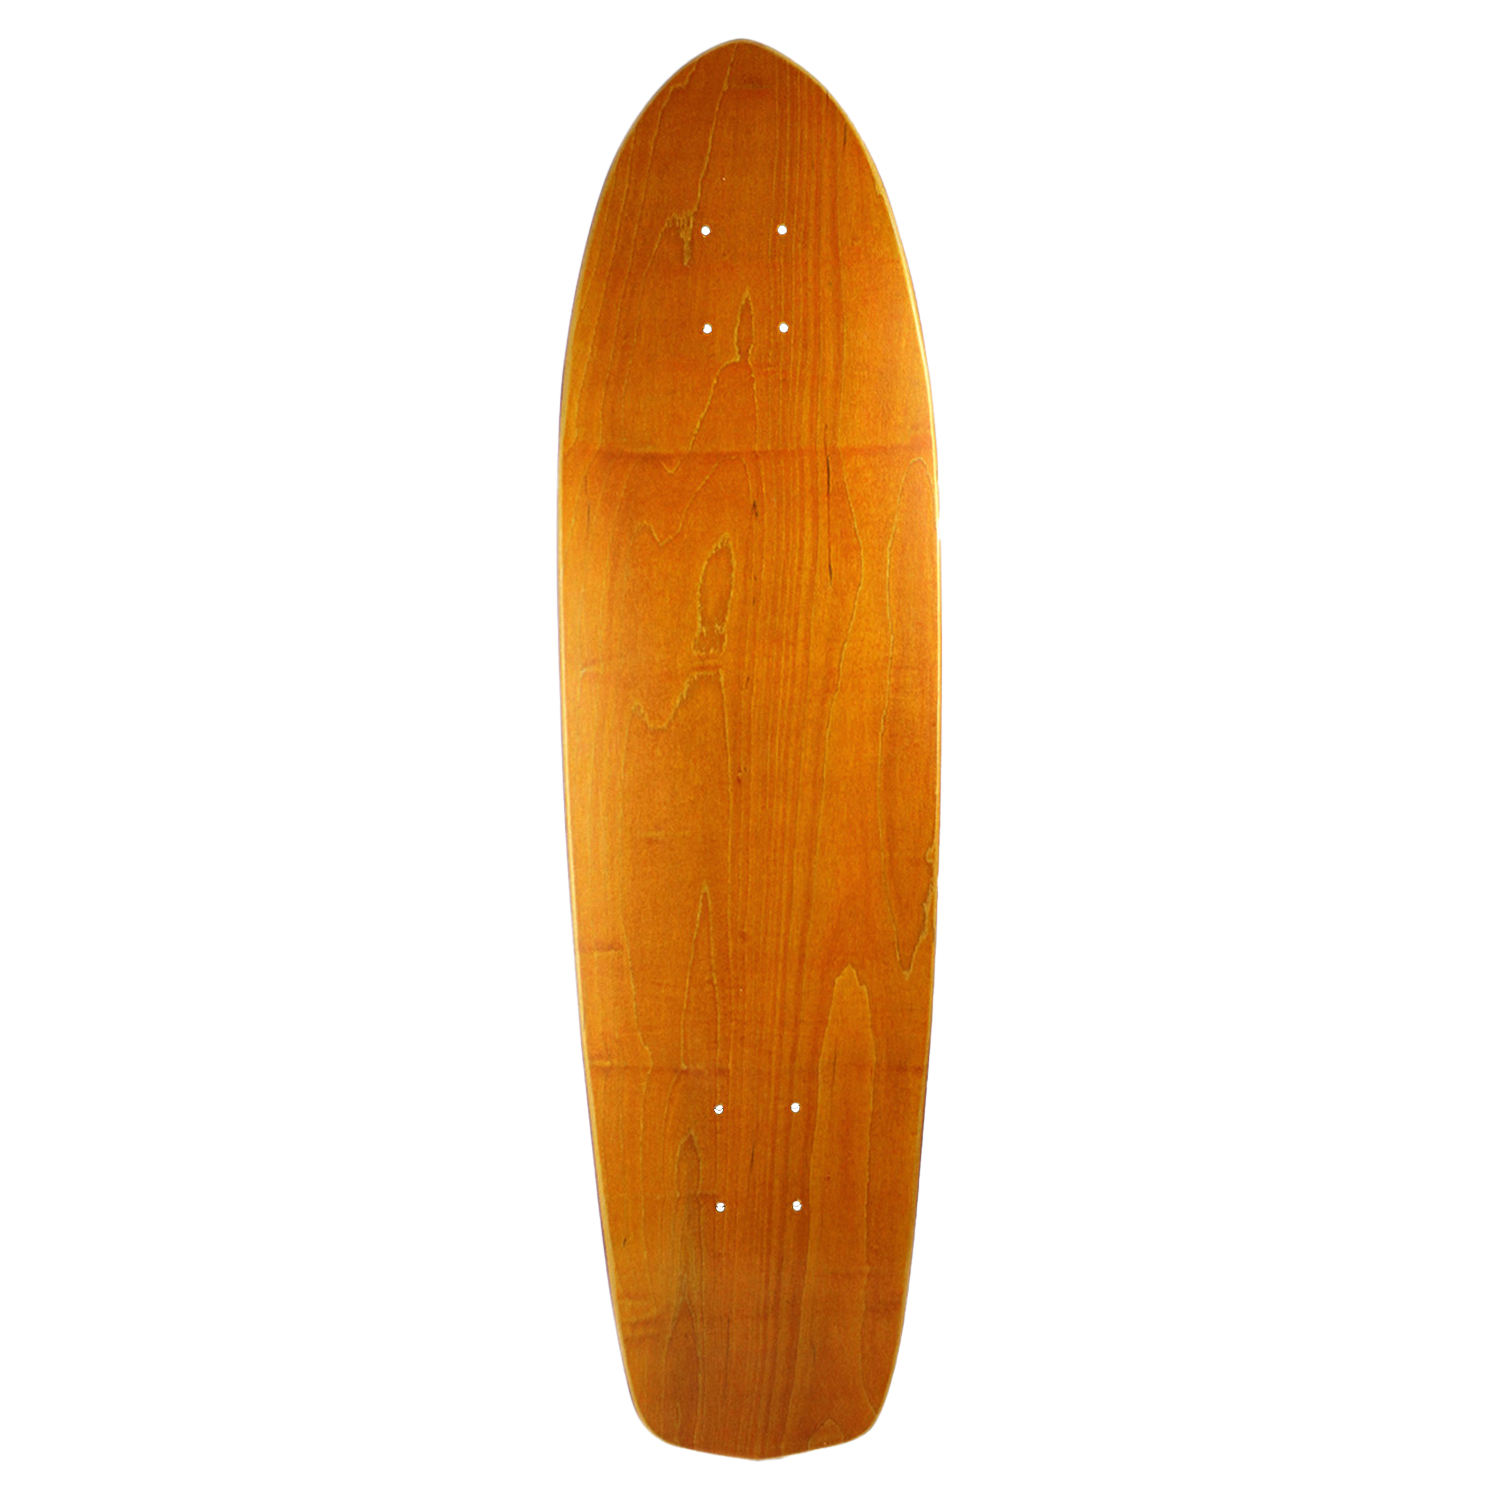 Moose Skateboard Cruiser Deck 7 Ply North American Maple Stain Orange 8.25in x 31in